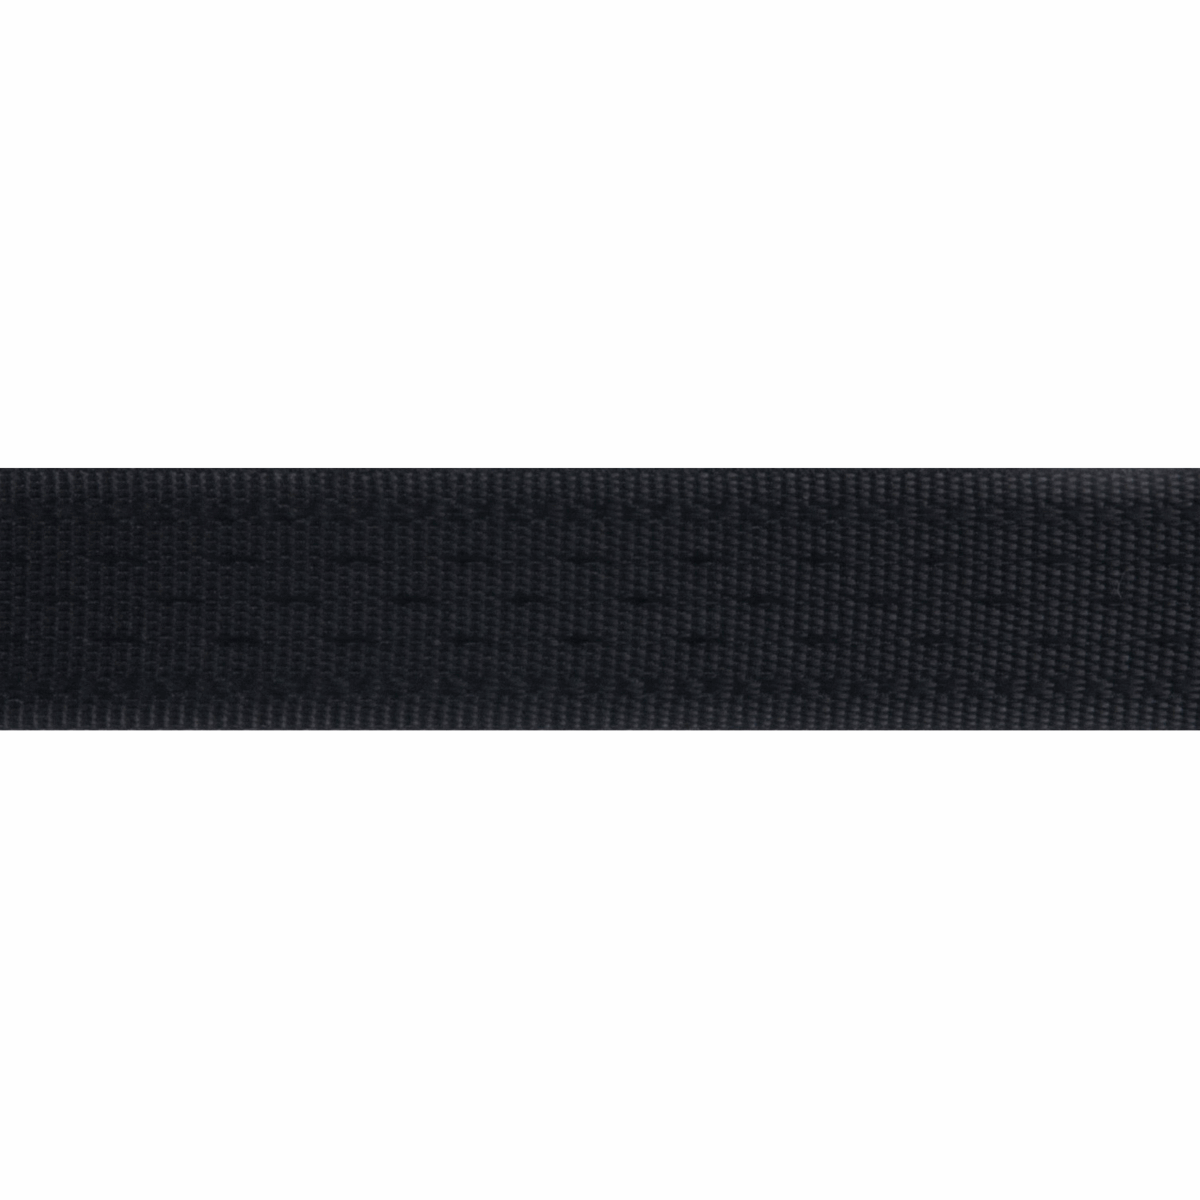 Seam Binding 2.5m x 14mm - Black